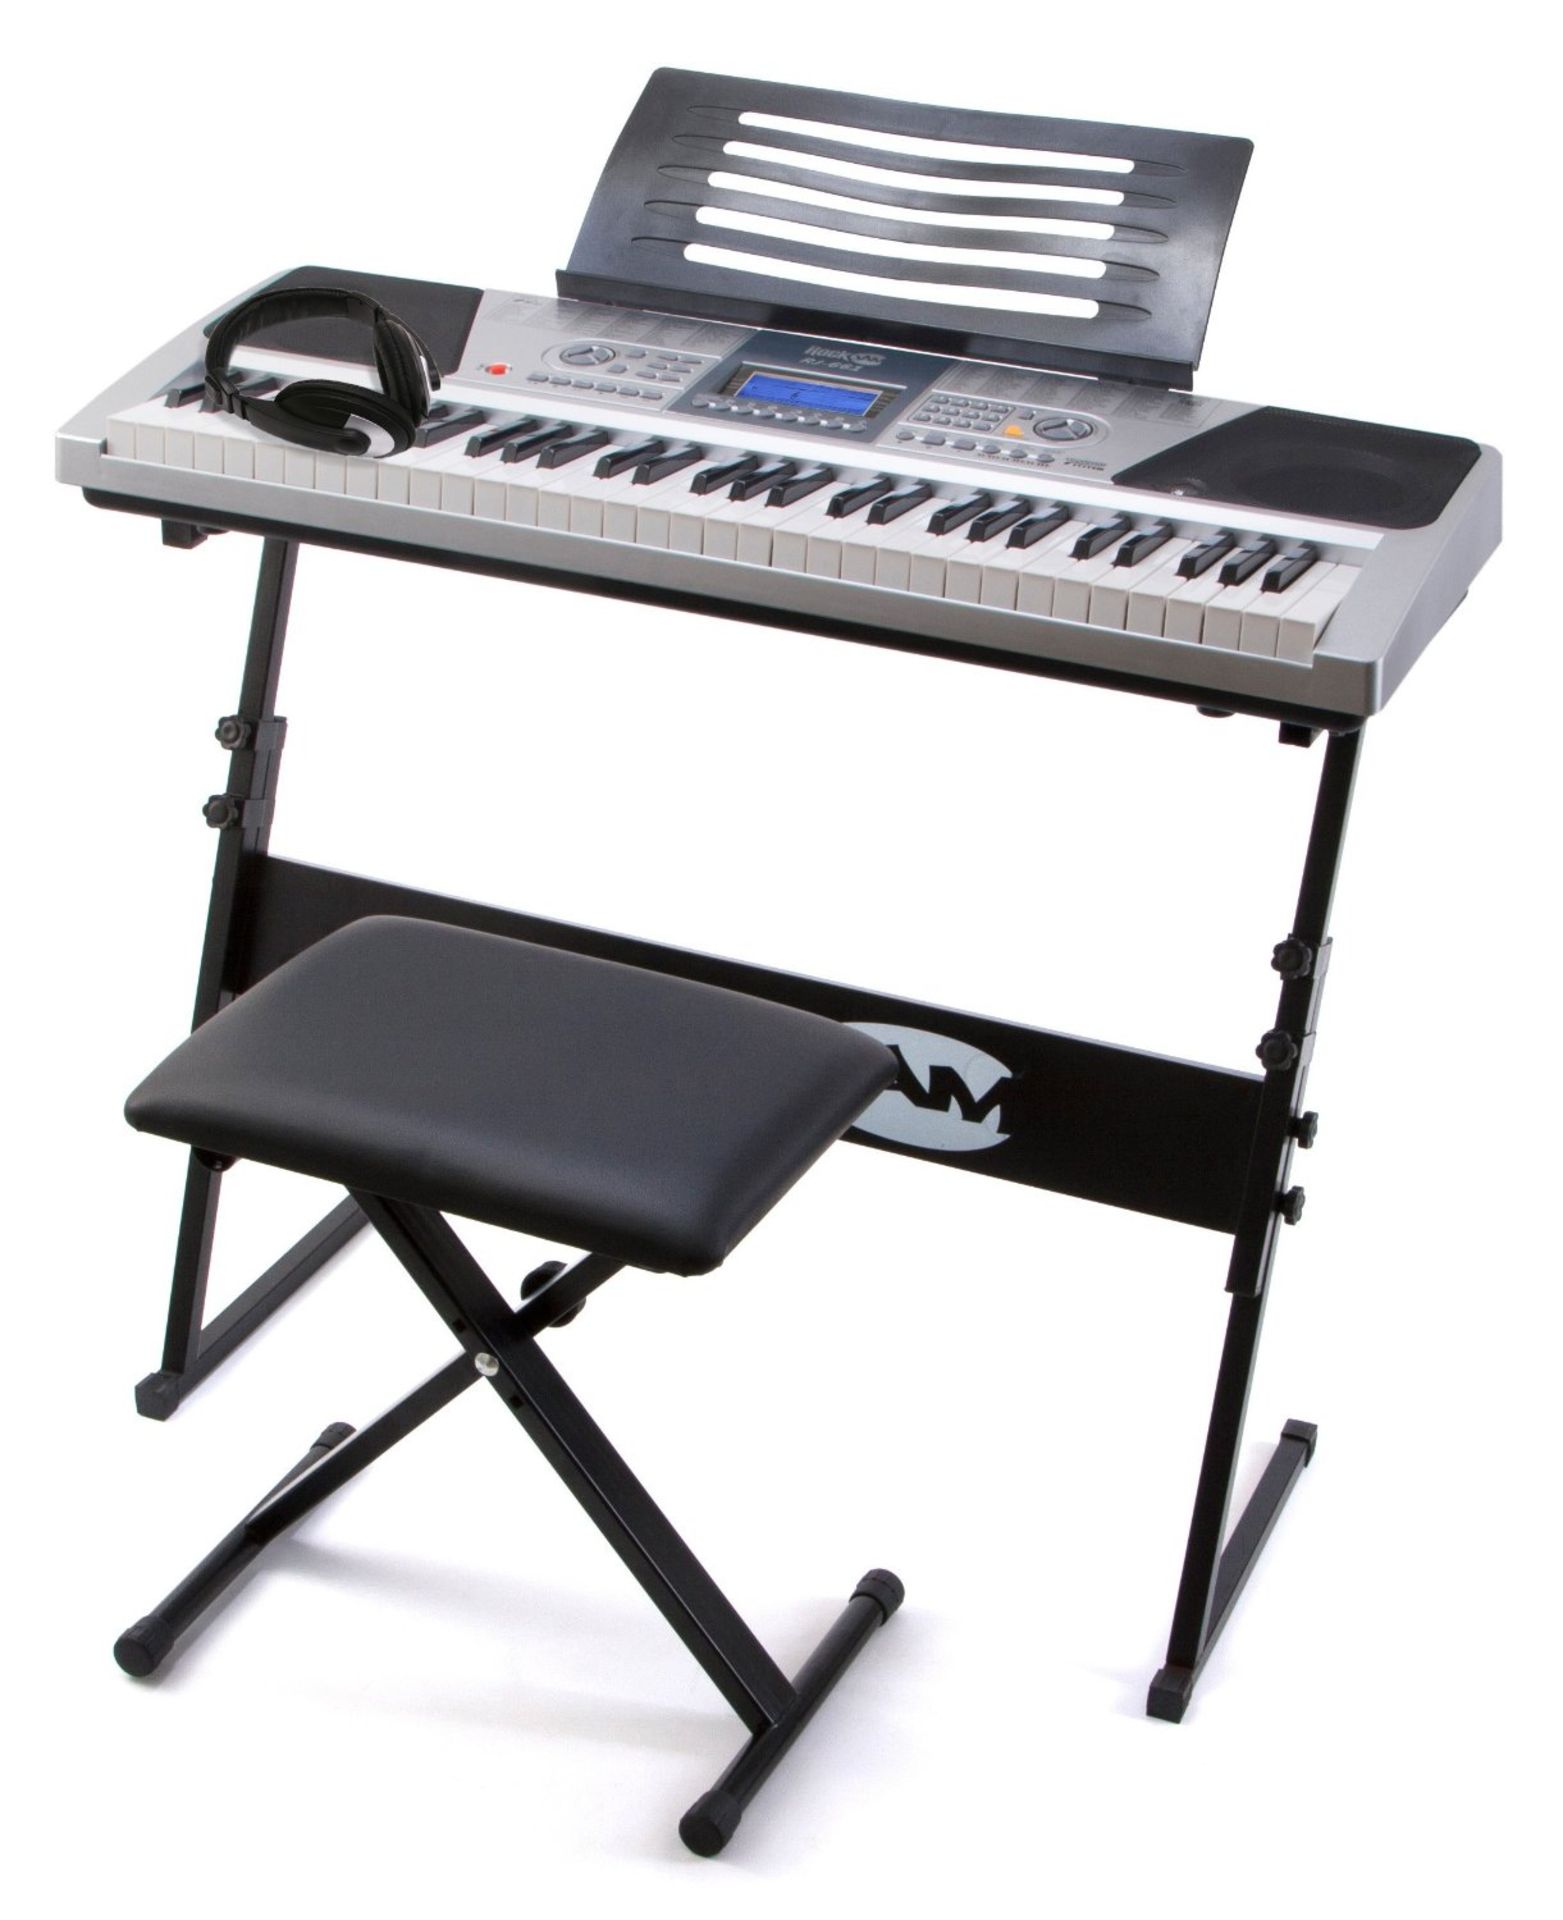 BRAND NEW RockJam RJ661 Electronic Interactive Teaching Piano RRP £99.99.